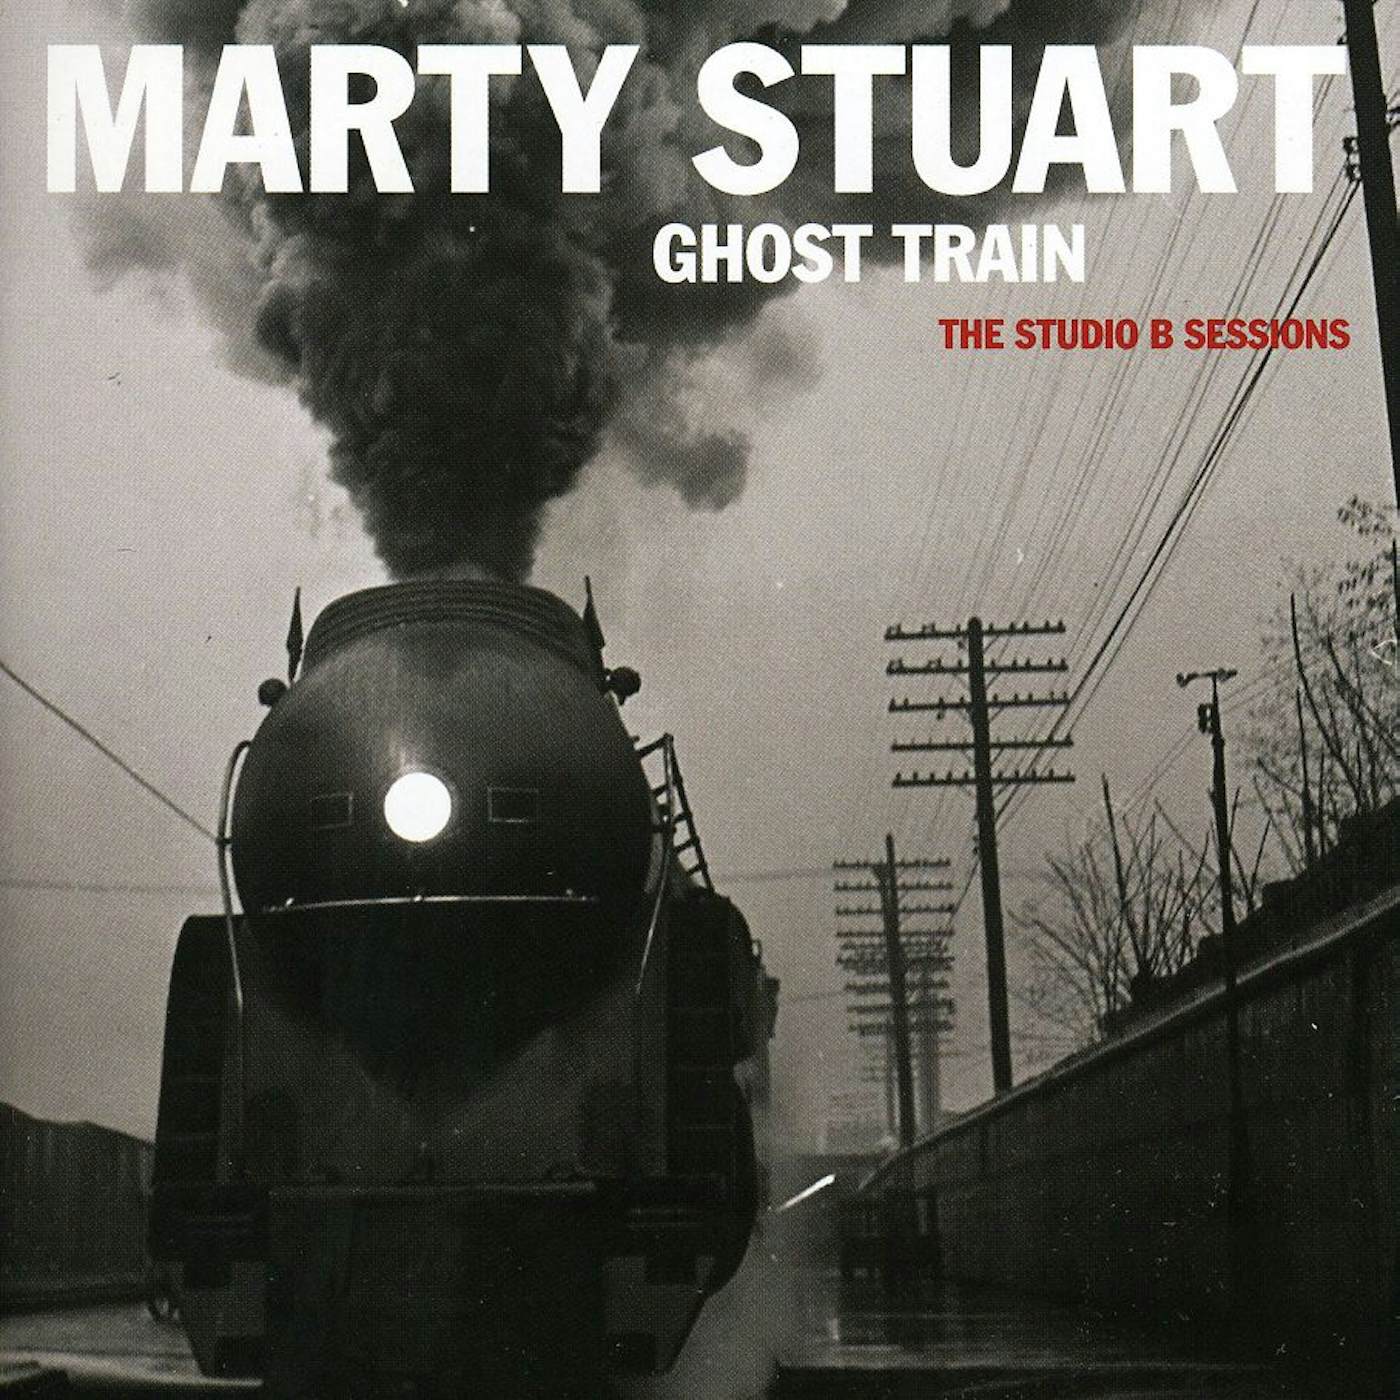 Marty Stuart GHOST TRAIN: THE STUDIO B SESSIONS CD